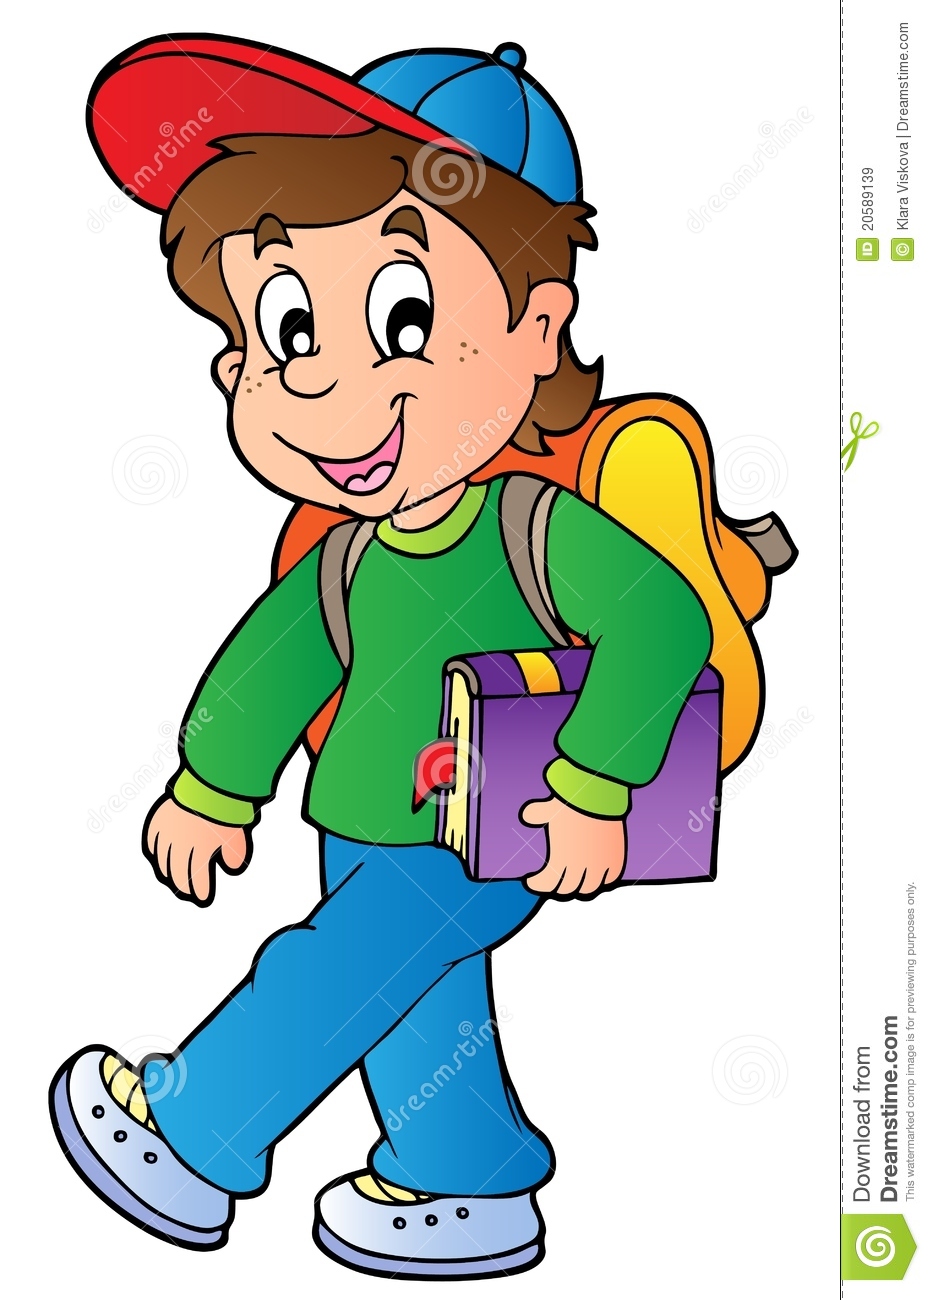 Cartoon Boy Walking To School Royalty Free Stock Images   Image